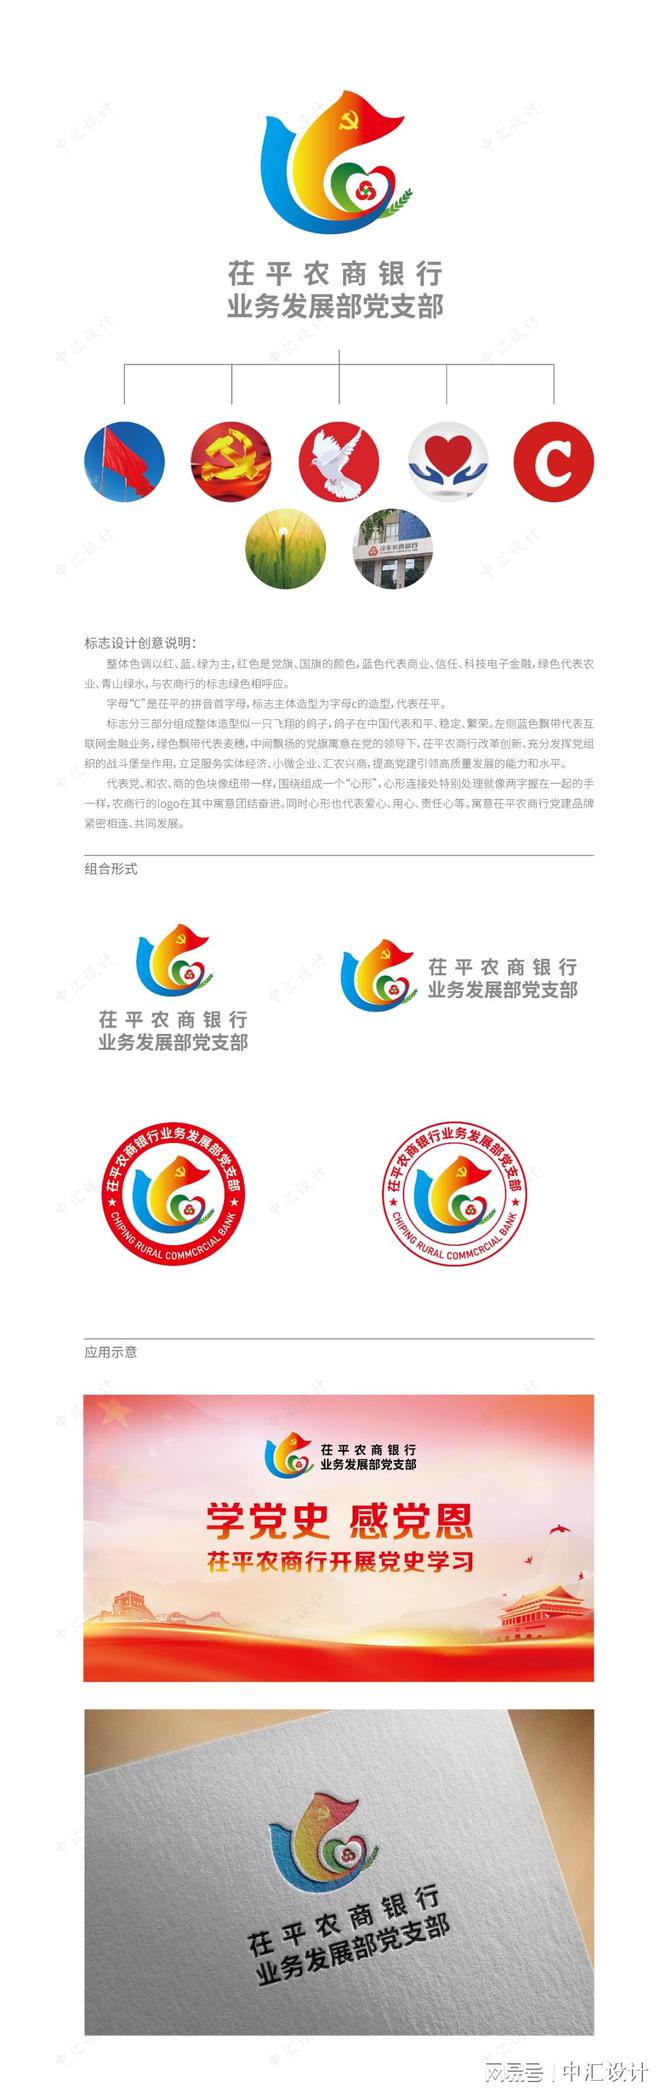 bat365中文官方网站中汇设计×金融行业logo设计(图1)